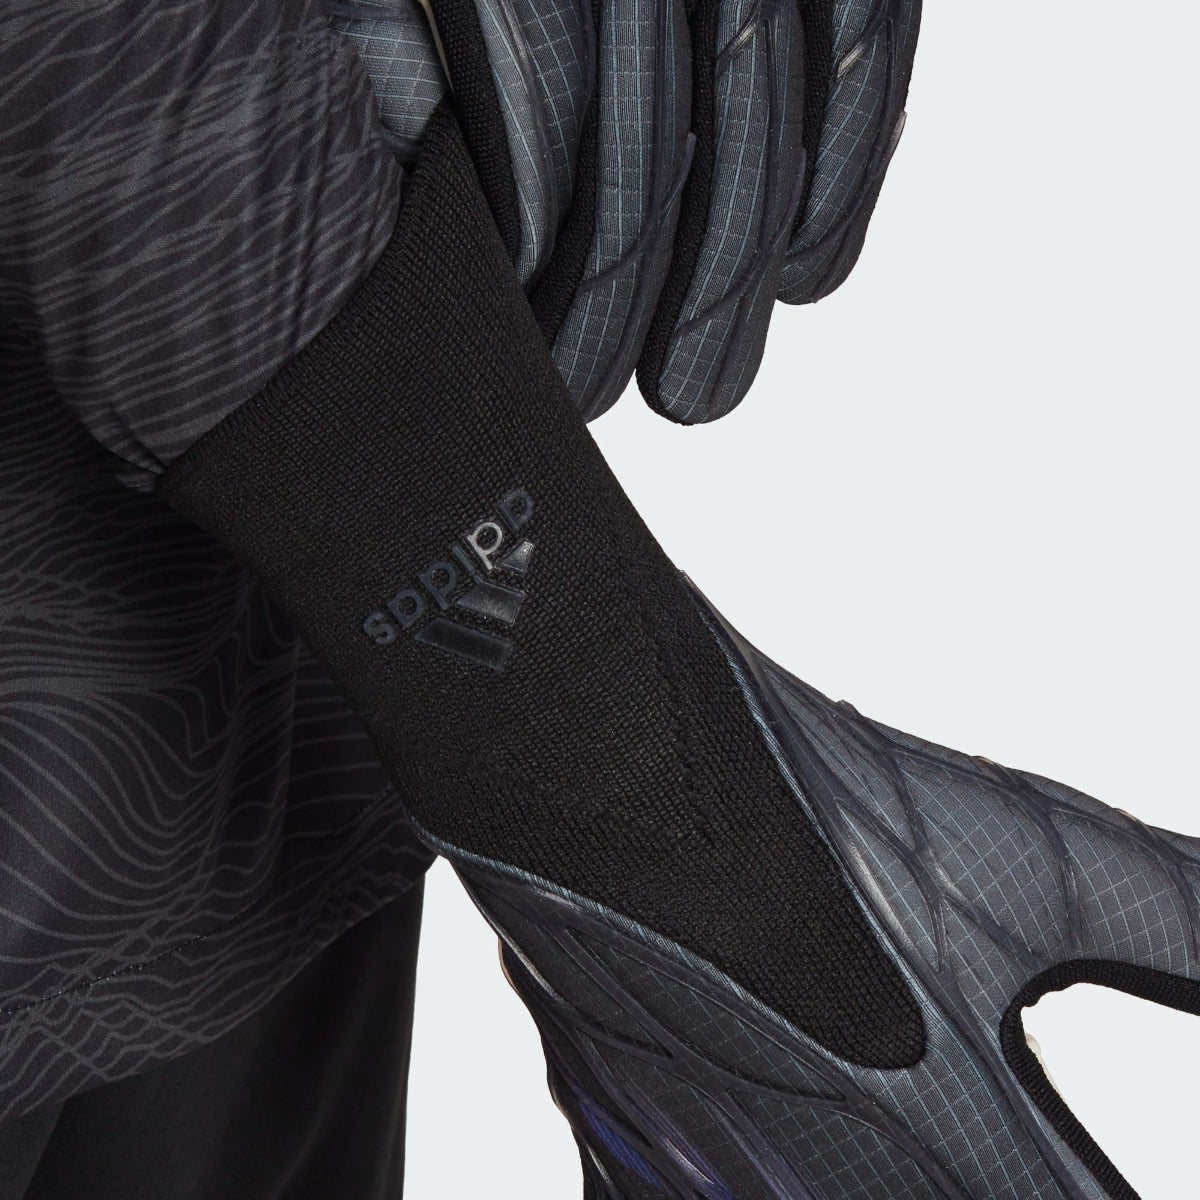 Adidas X Pro Goalkeeper Gloves - Black-Grey-Blue (Model 3)